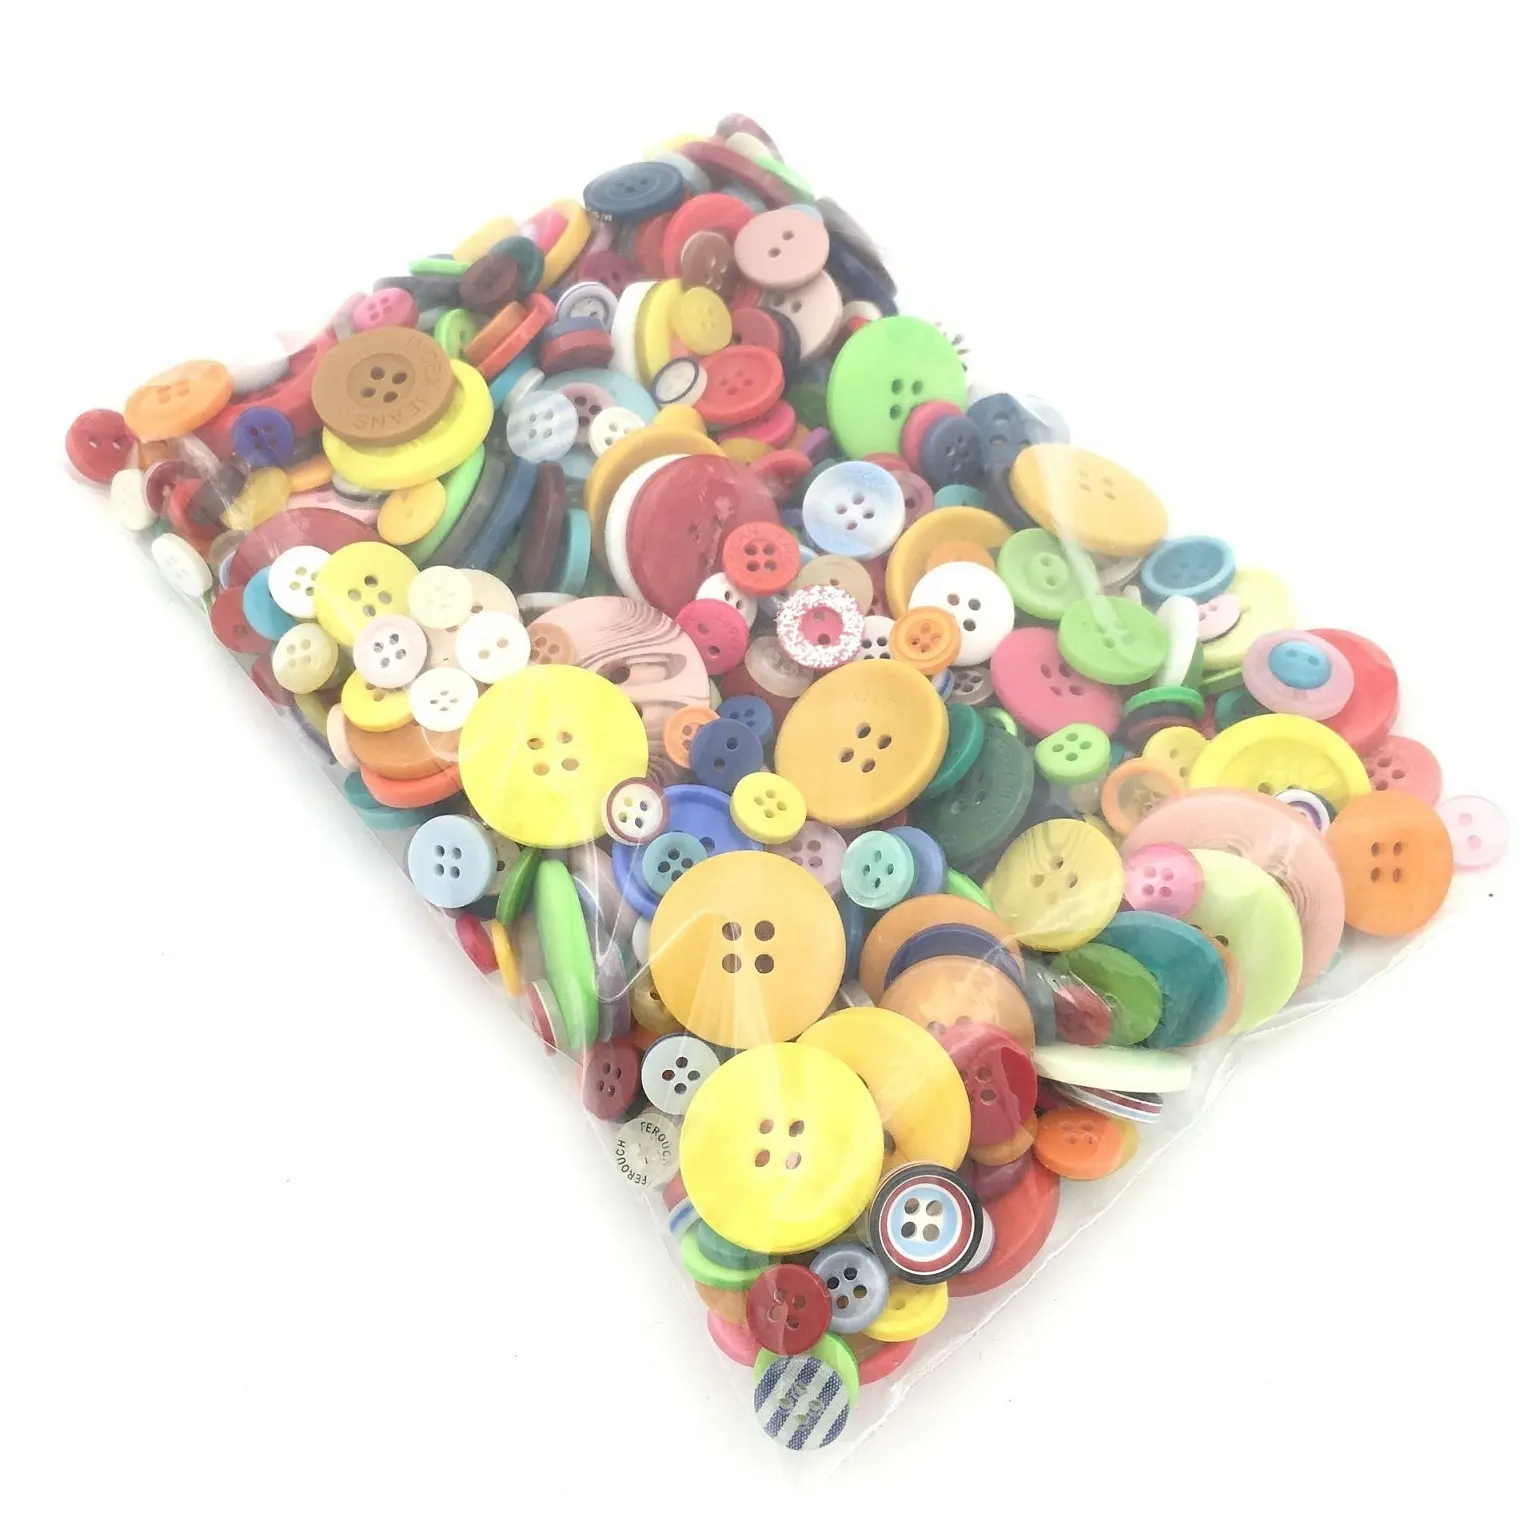 Botones de resina de 300 gramos/bolsa, 5mm a 30mm de diámetro, mezcla de 4 agujeros, para scrapbooking, costura, botón decorativo DIY, envío gratis